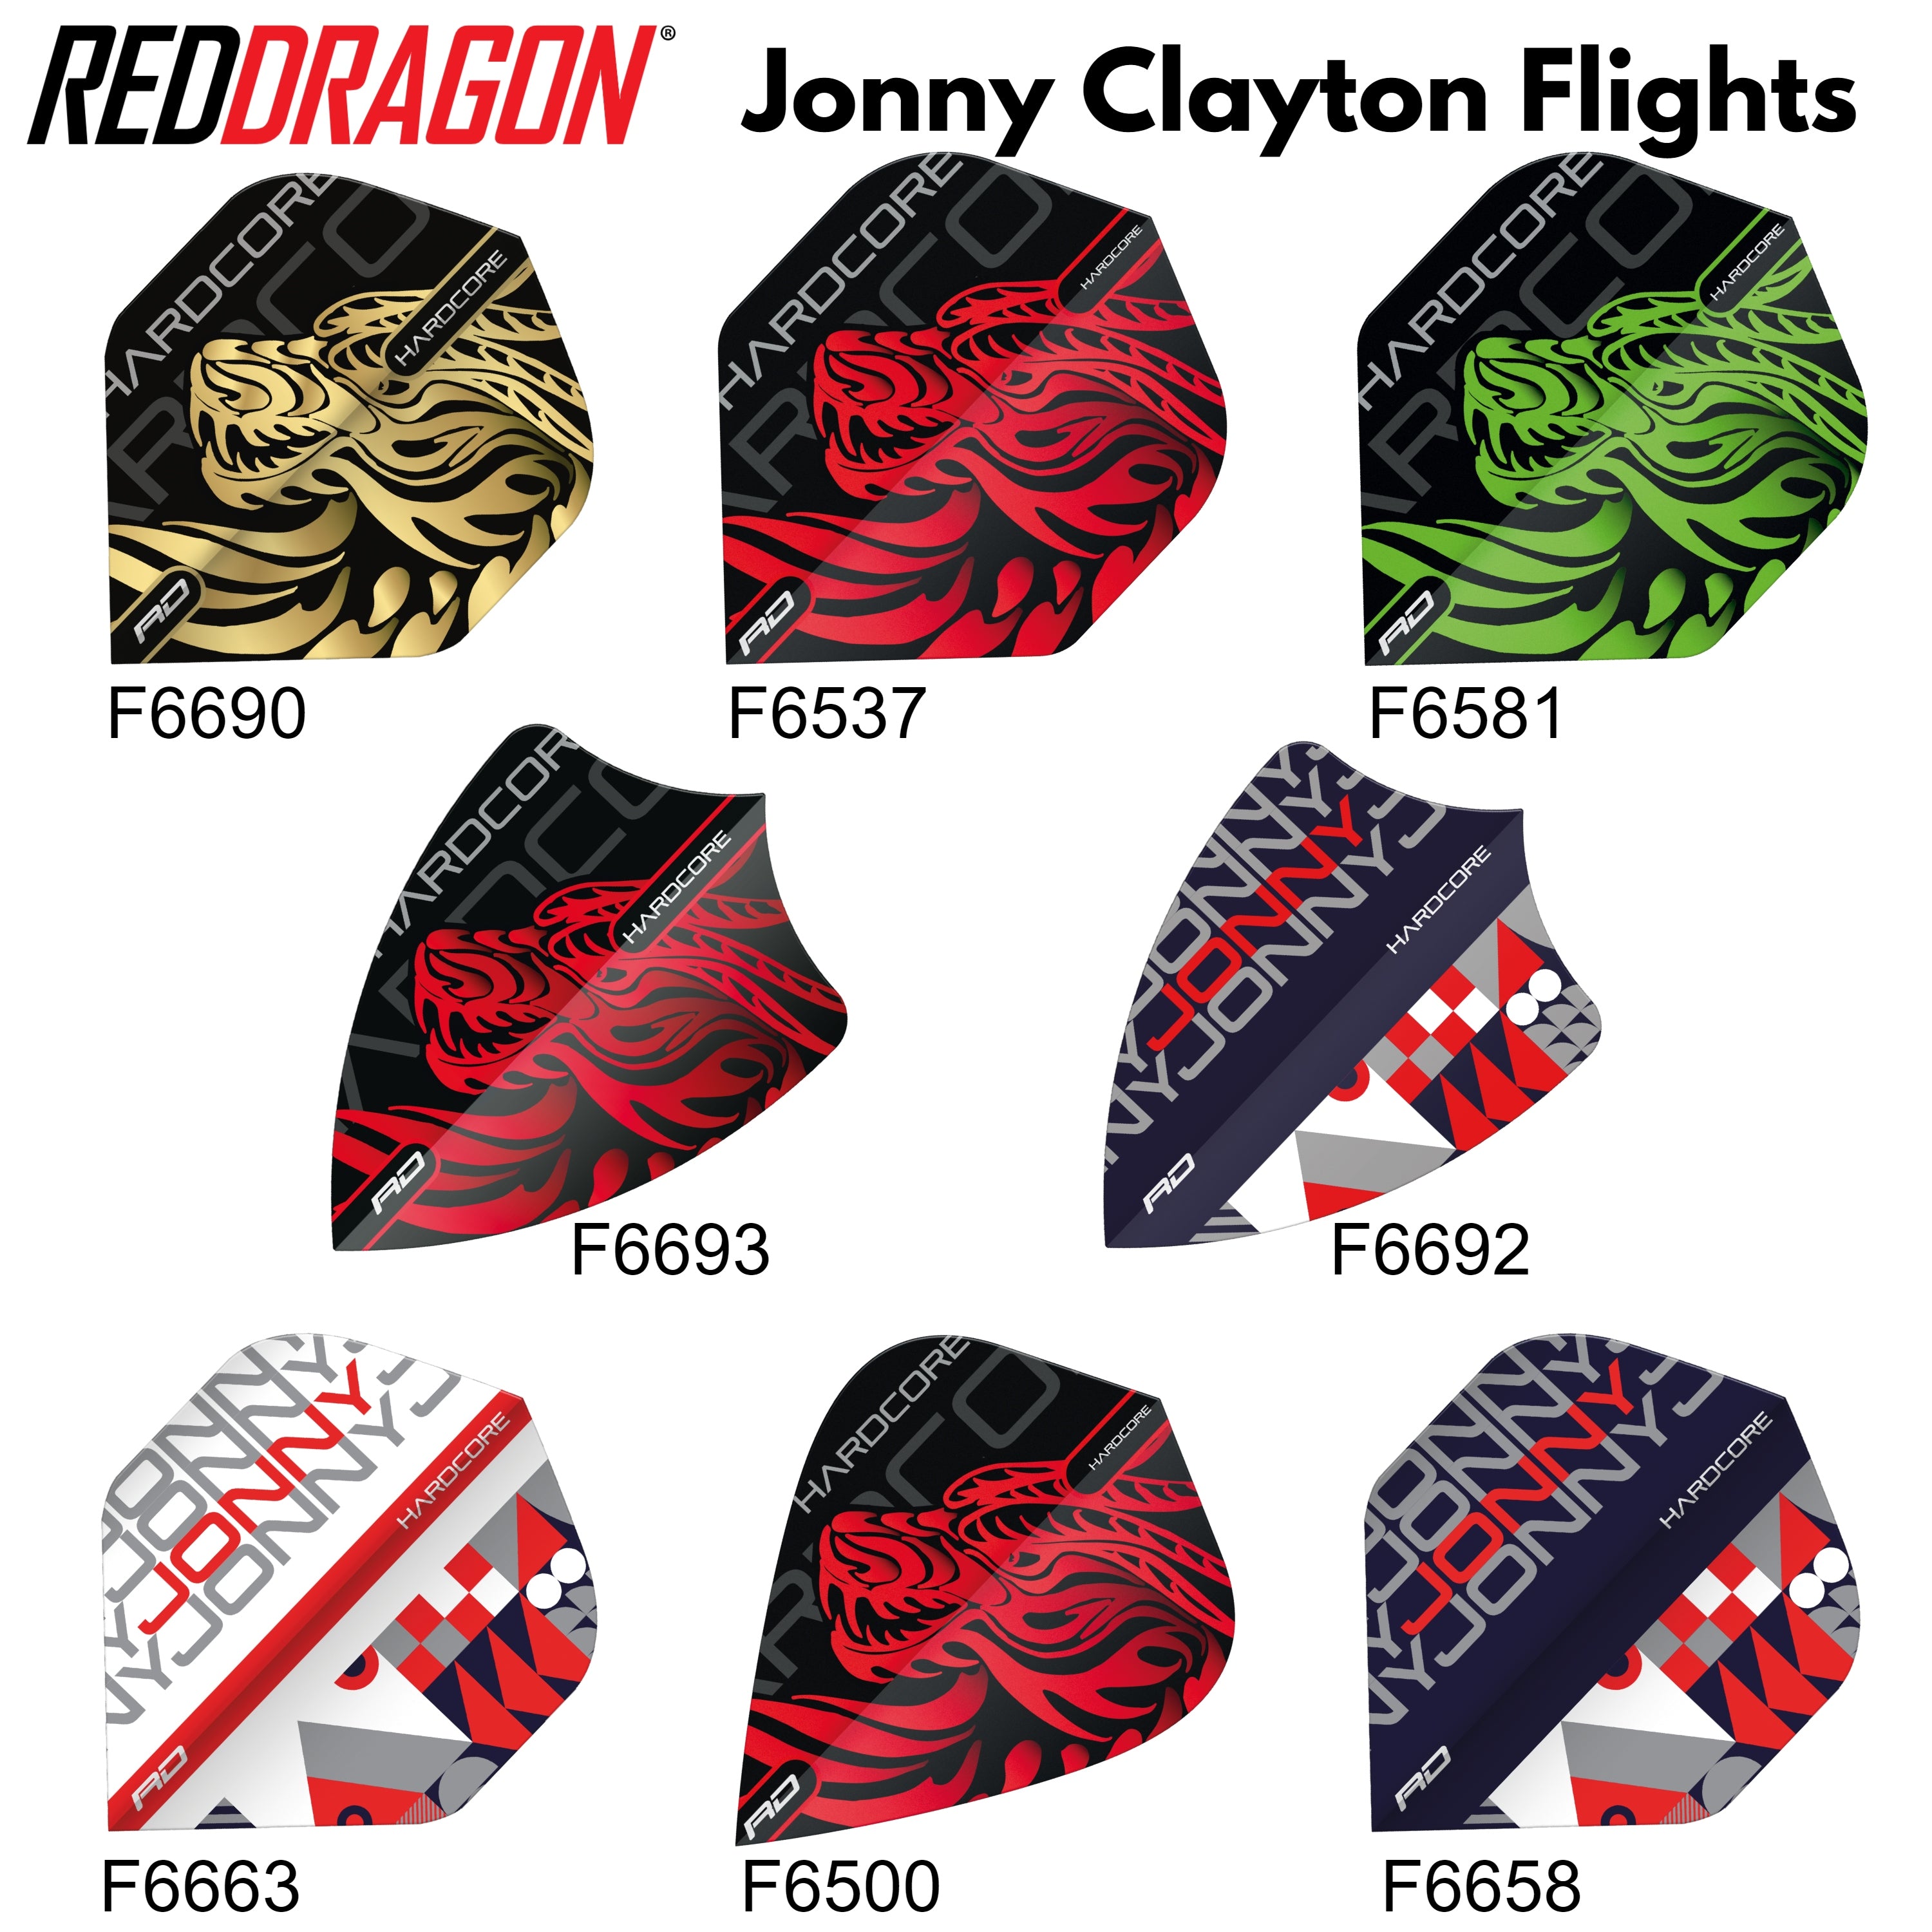 Red Dragon Hardcore Jonny Clayton The Ferret Flights